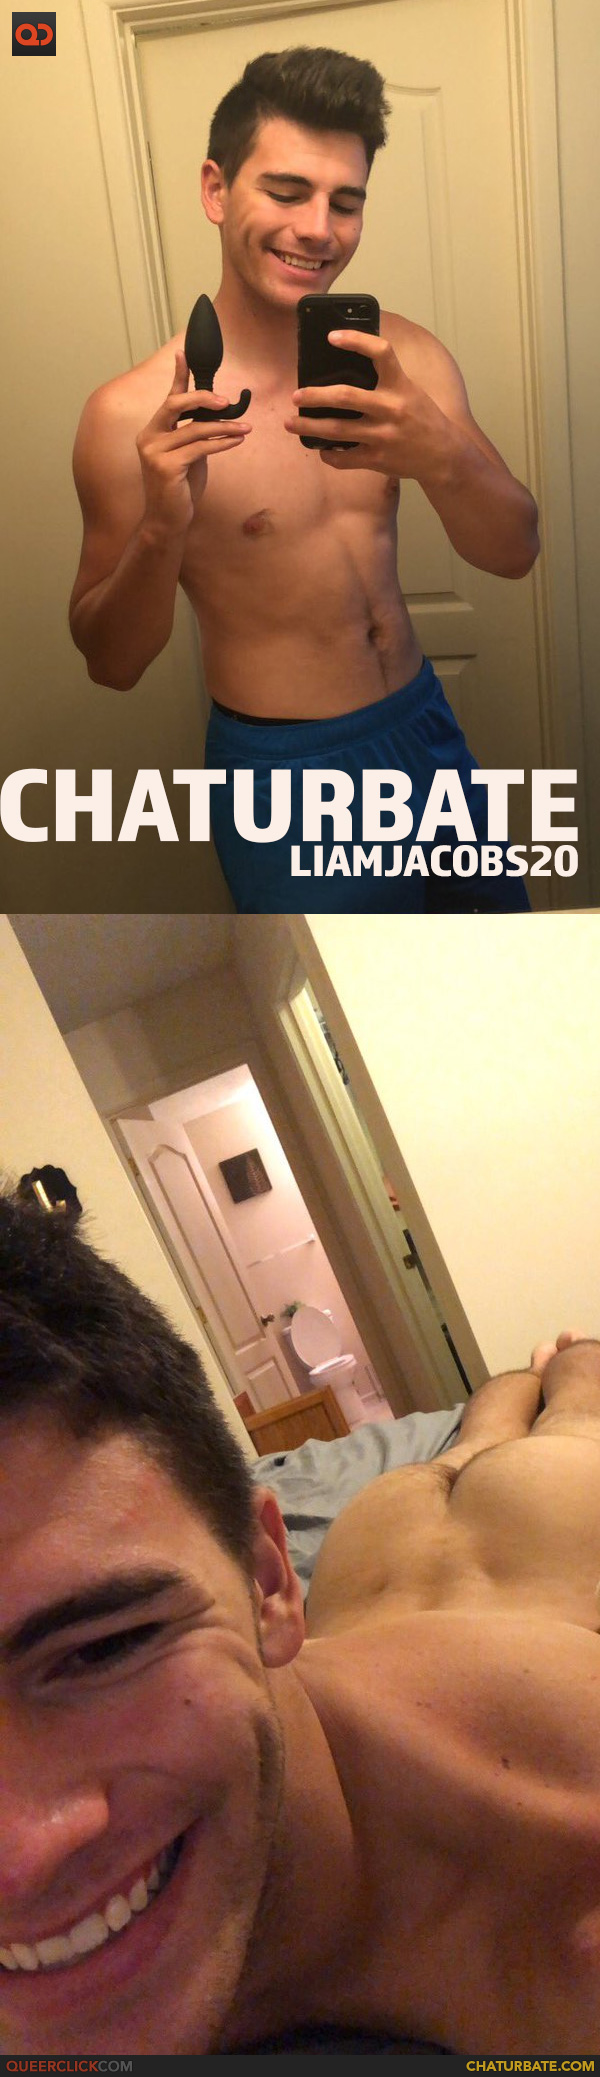 Chaturbate: liamjacobs20